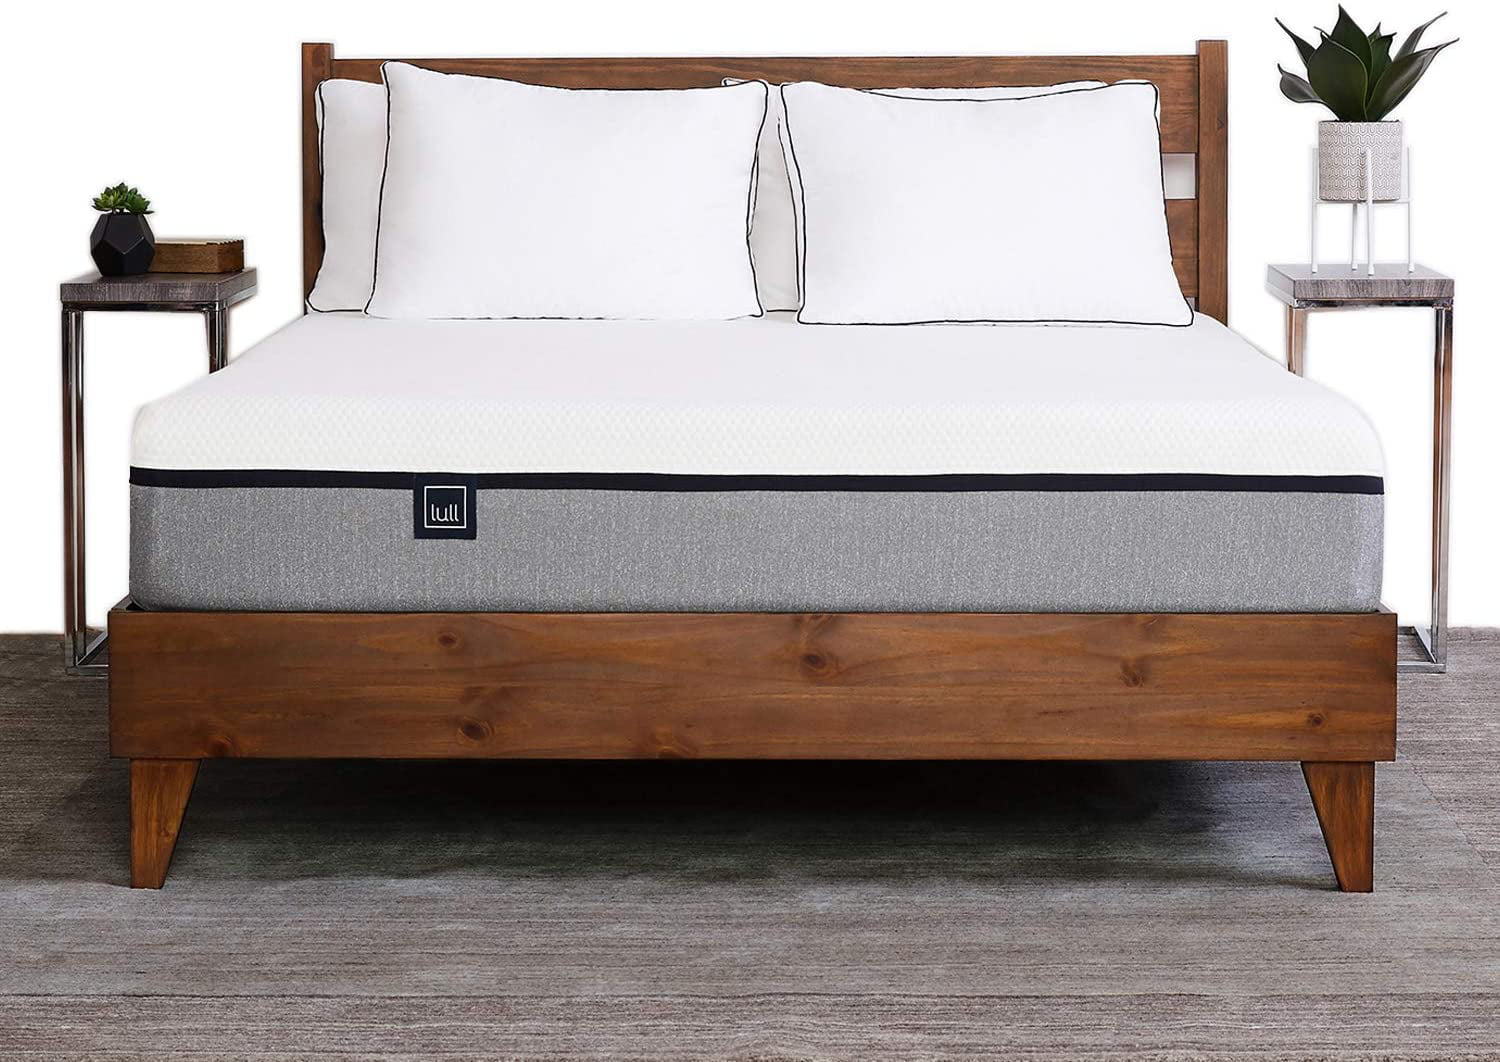 platform bed for lull mattress